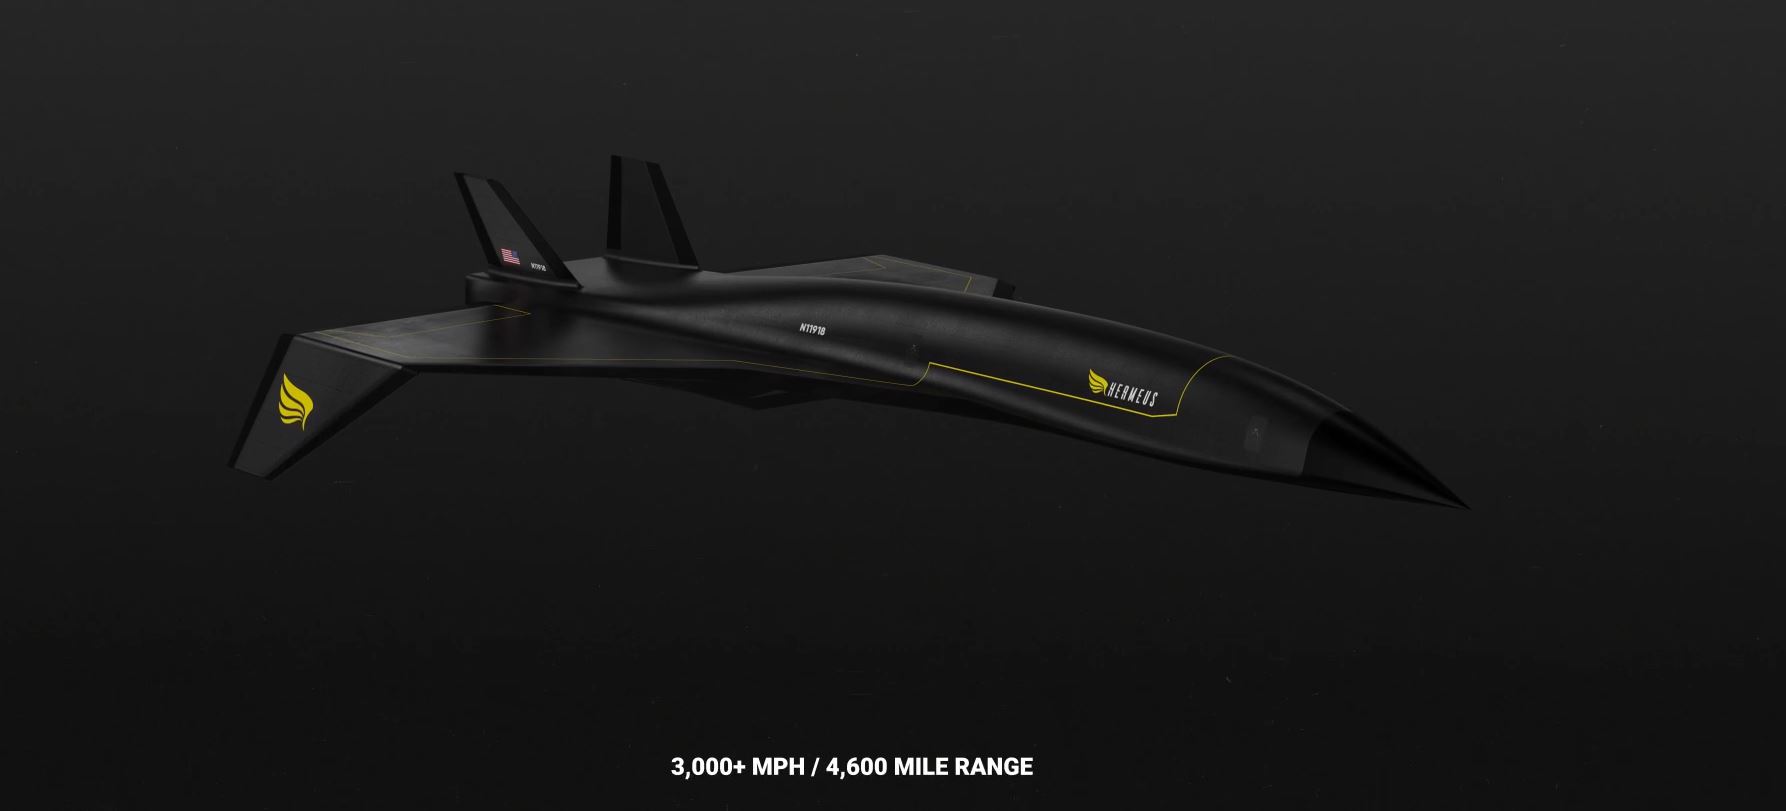 US Airforce To Test A Mach 5 Jet Quarterhorse 2